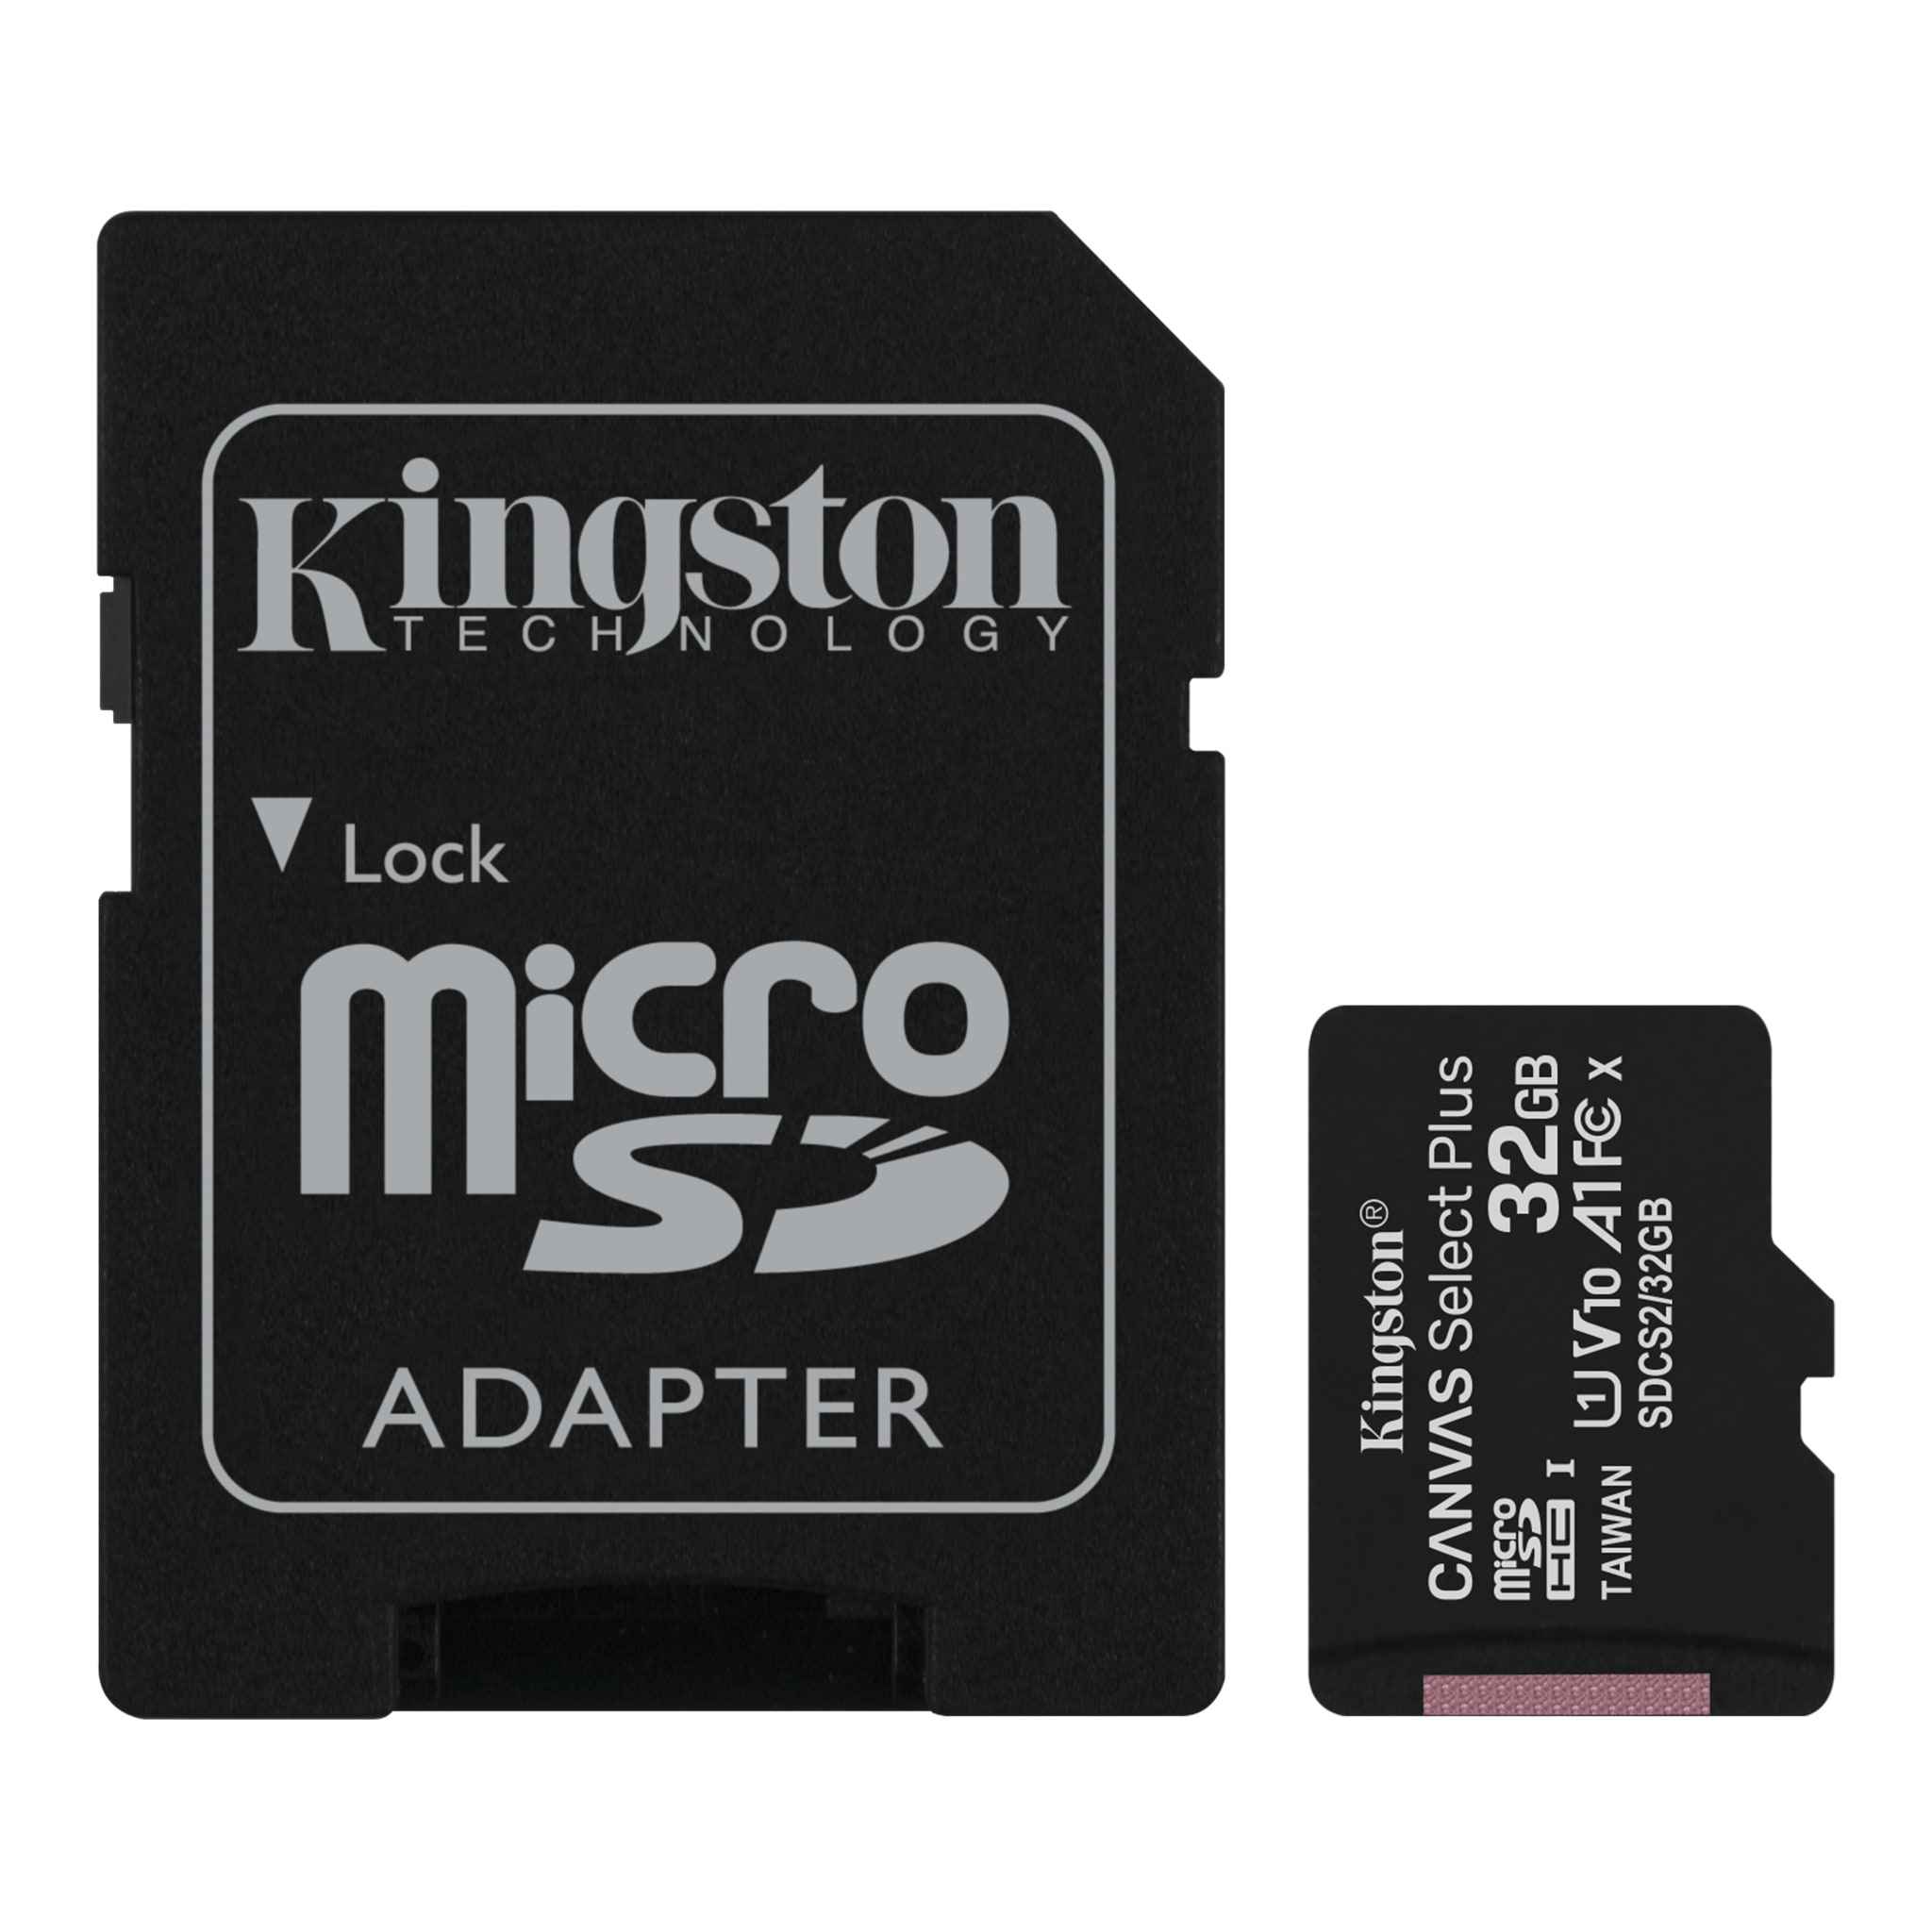 CH803KNG93 – SDCS2-32GB.01